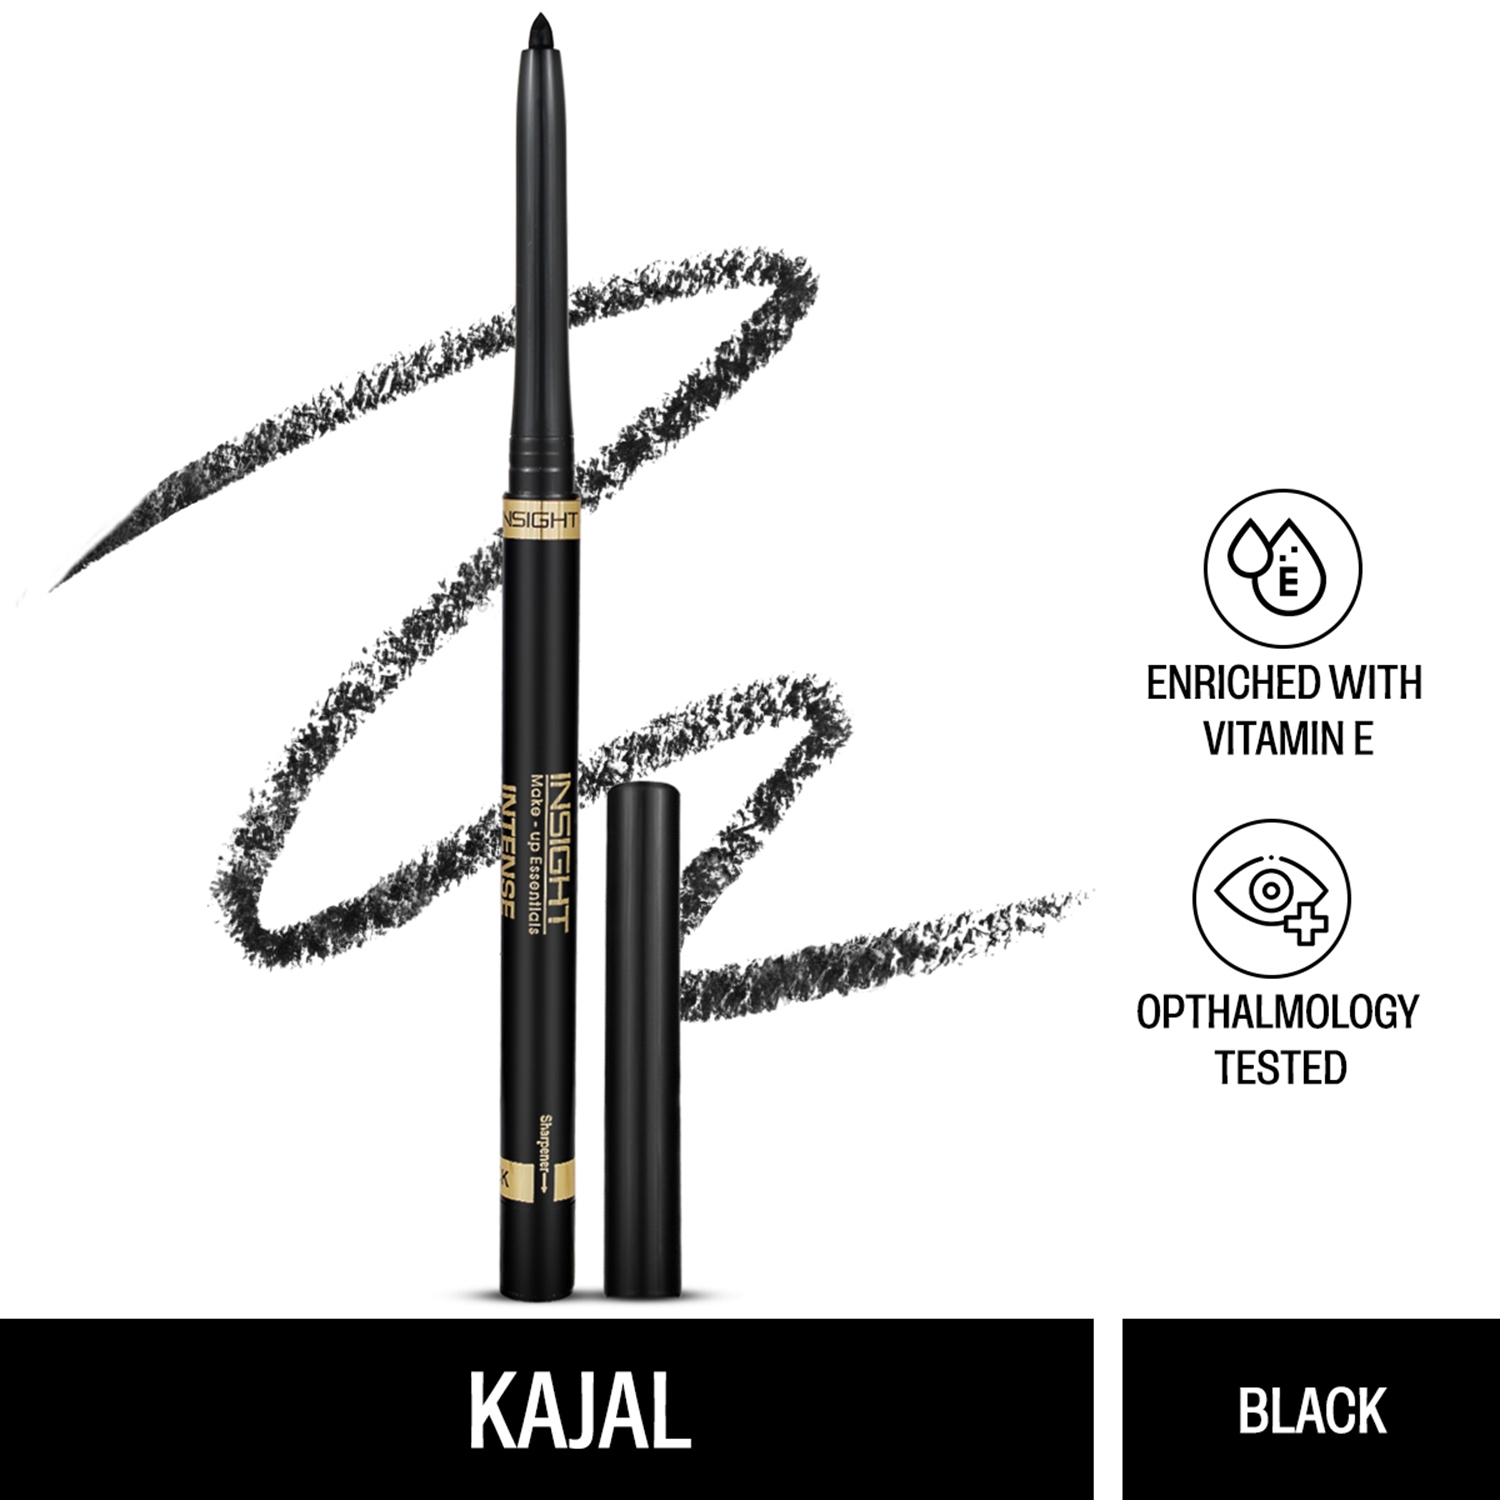 Insight Cosmetics | Insight Cosmetics Intense Kohl Kajal - Black (0.35g)